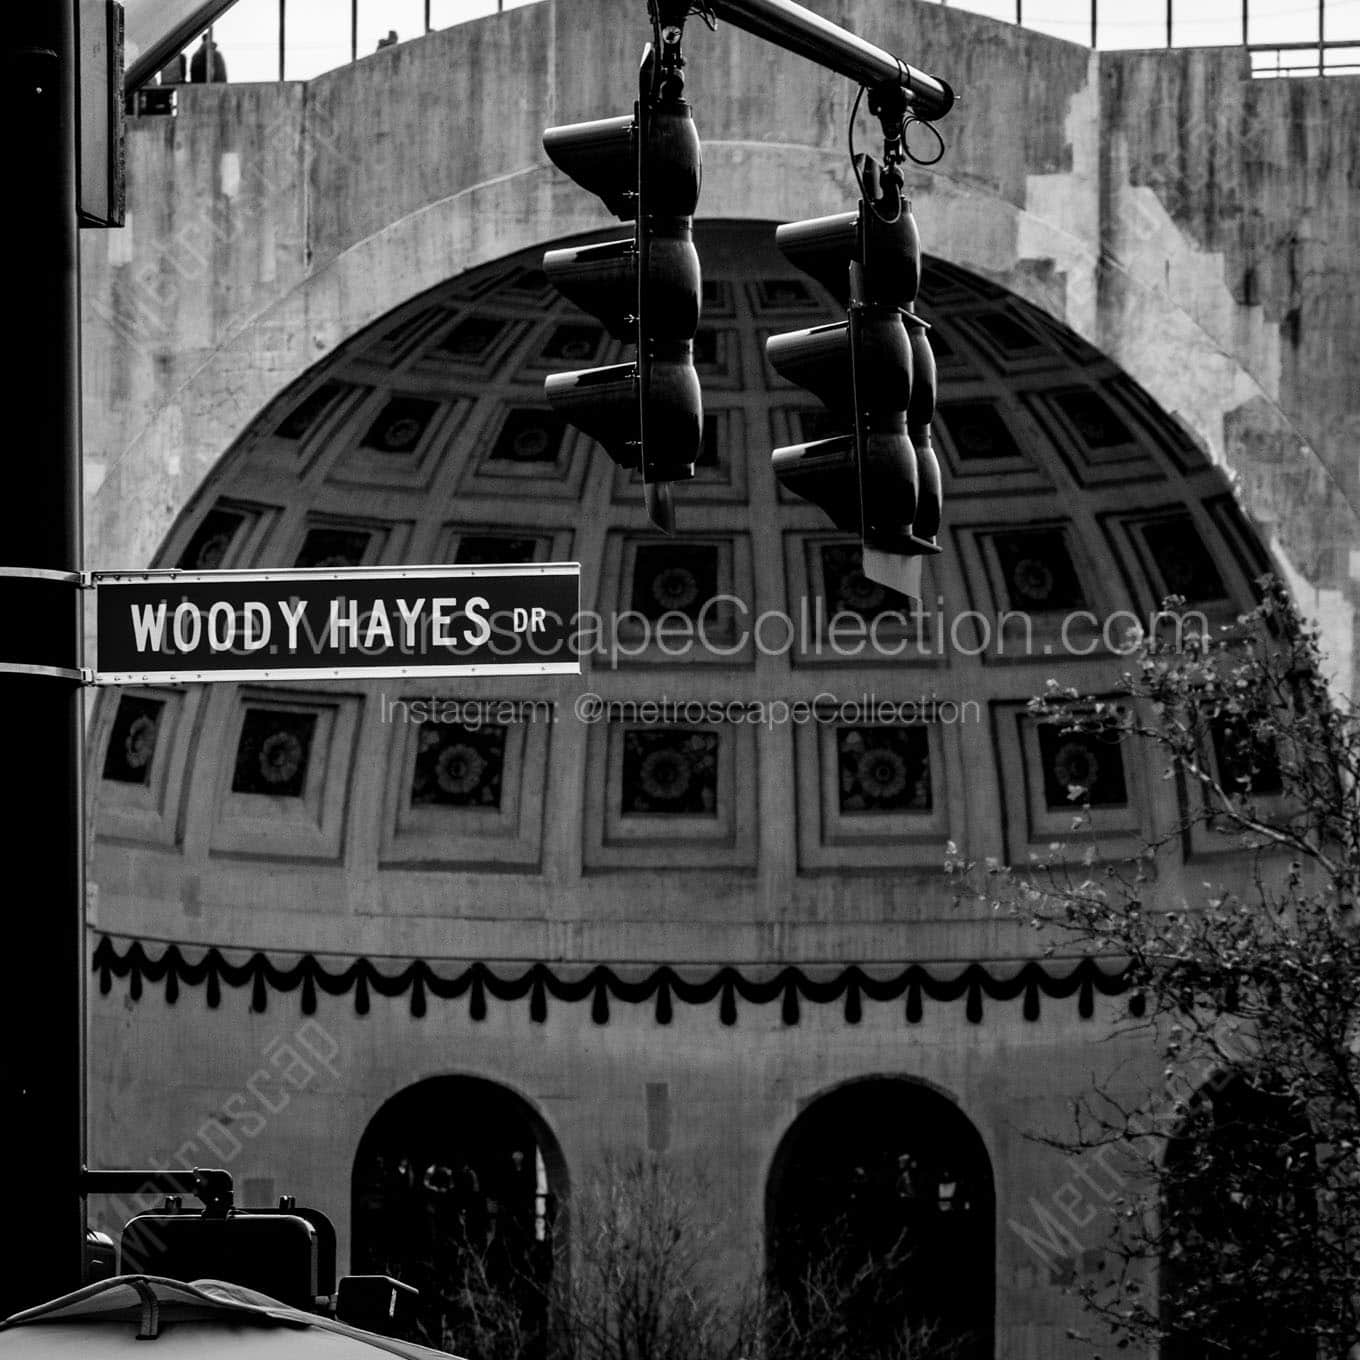 woody hayes drive ohio stadium Black & White Office Art